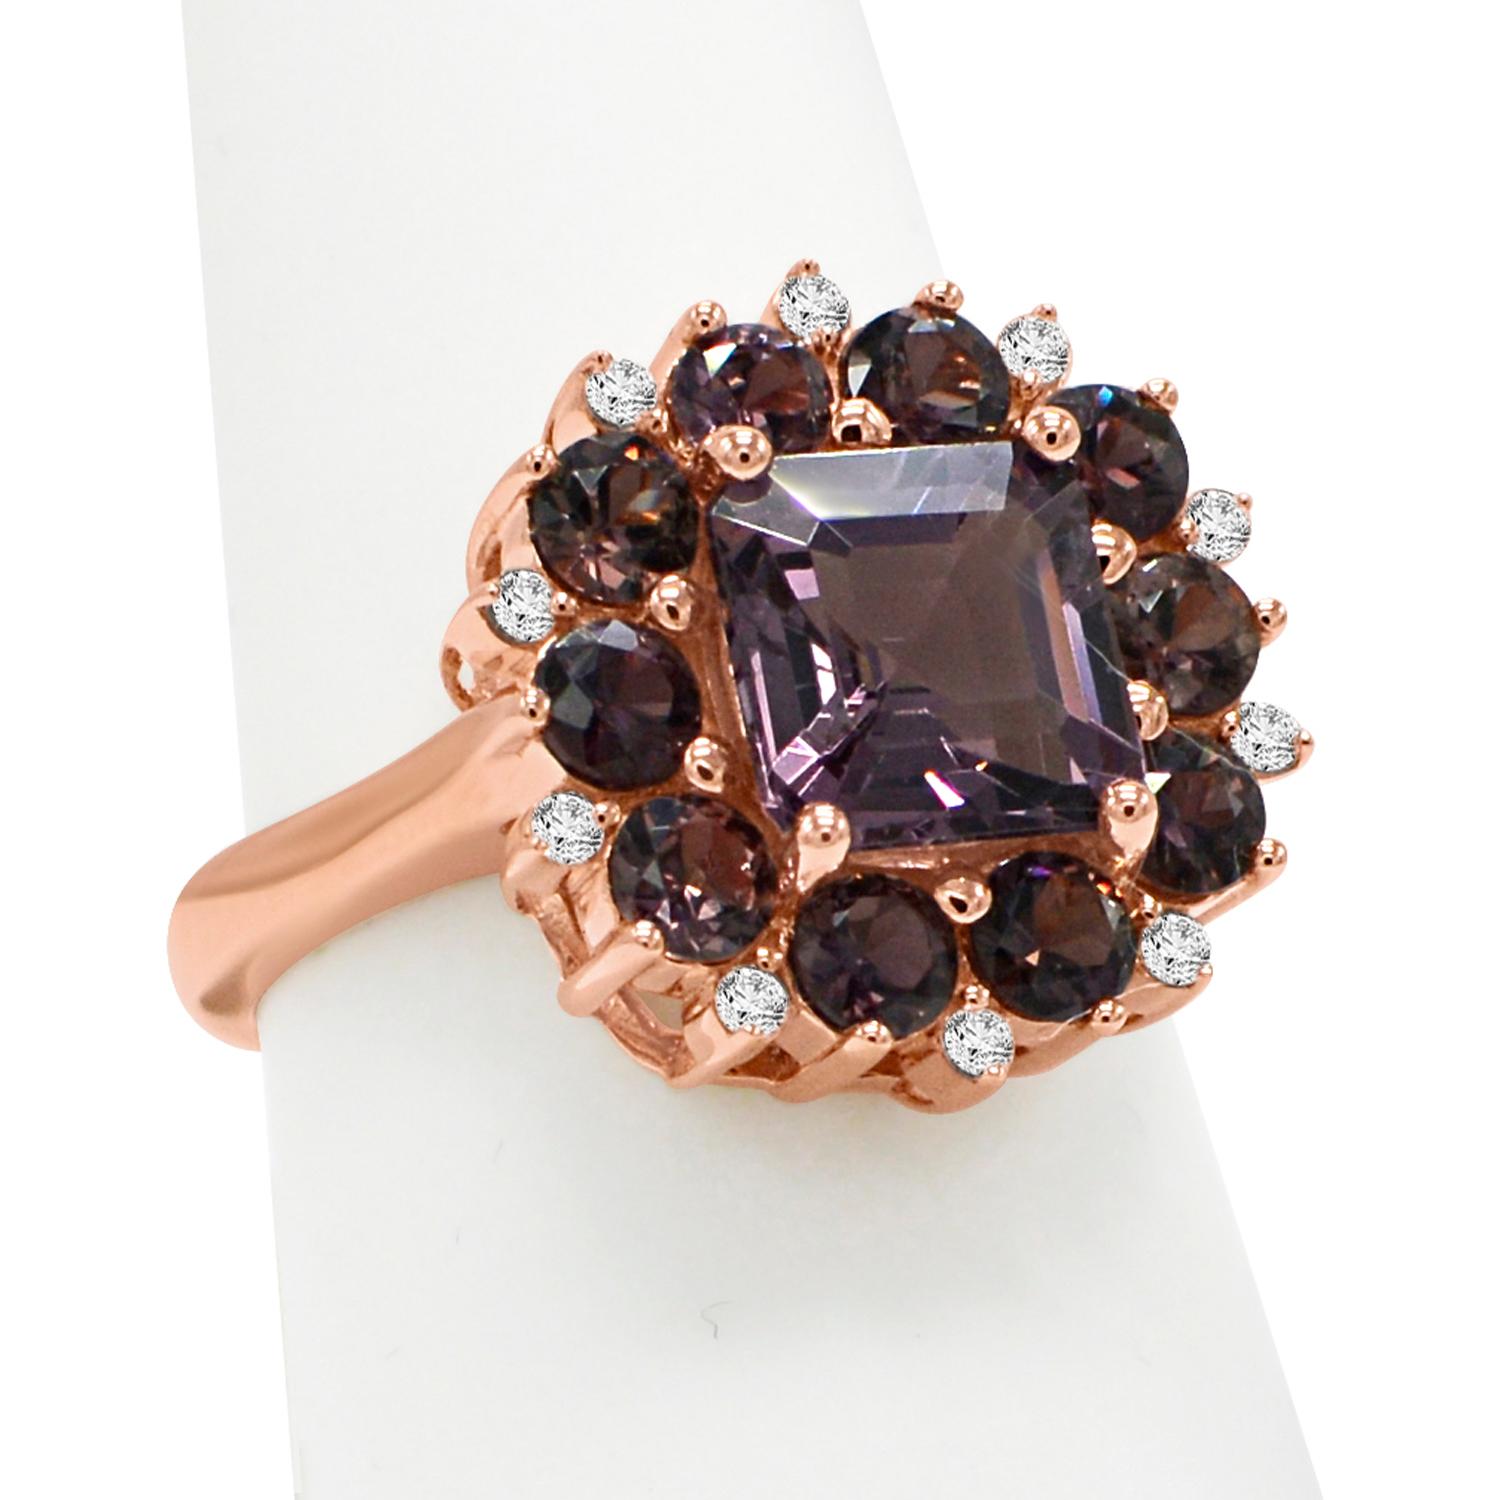 Montana Sapphire (round stones) &  Purple Spinel - Square  shape 2.83  carat.
Lavender Colors and tone
